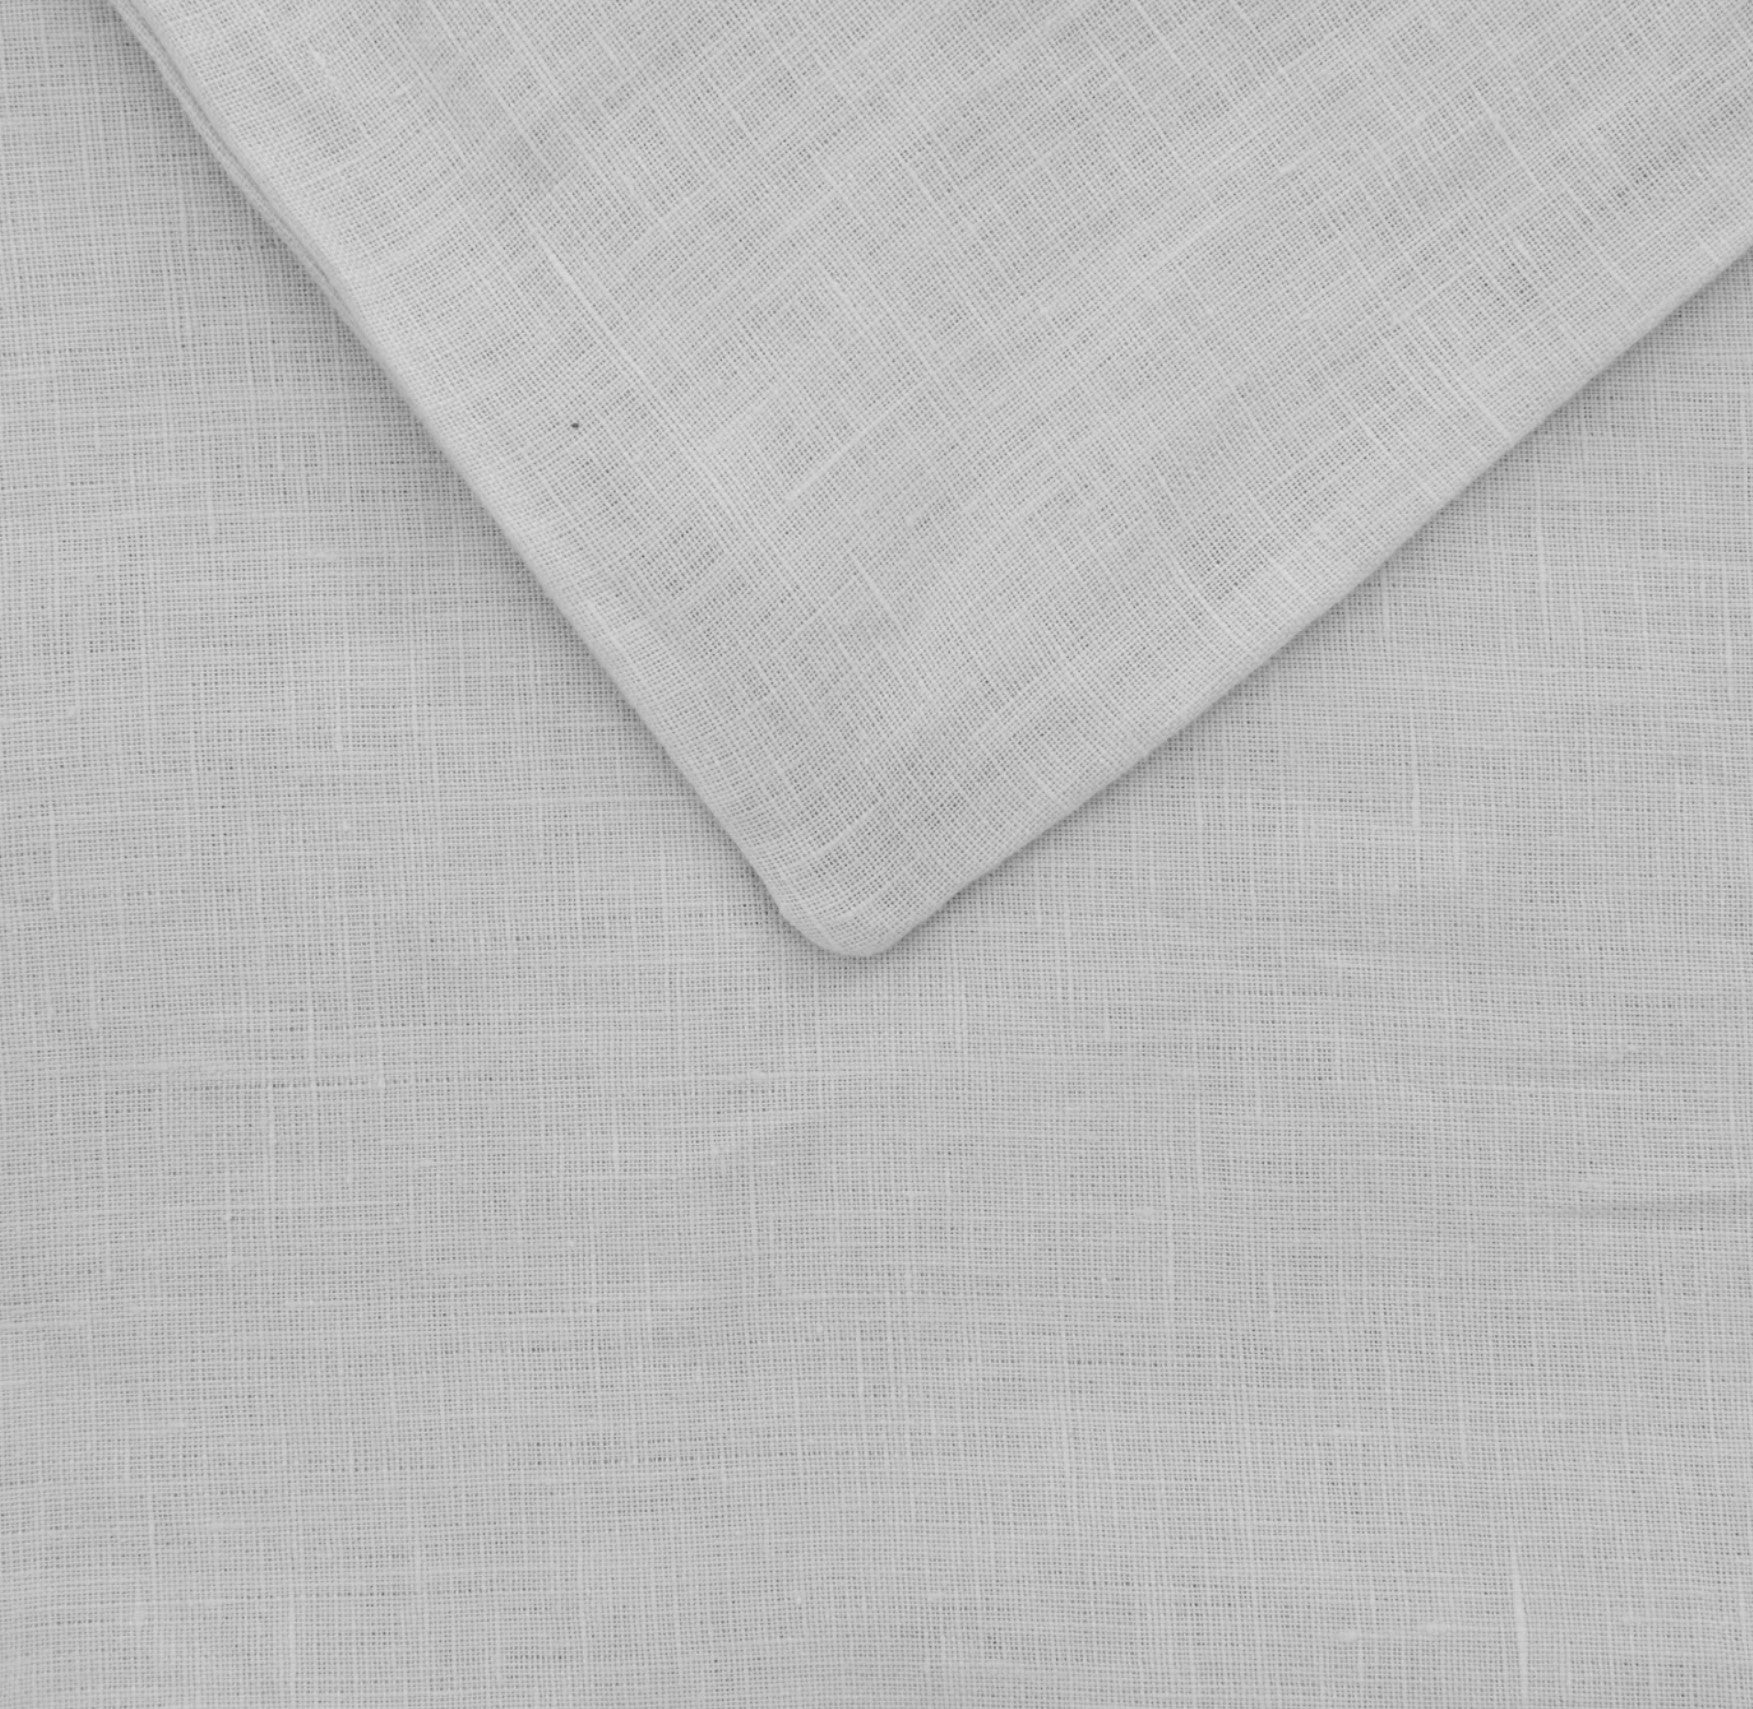 European Flax Linen Quilt Cover Set - Dove Grey